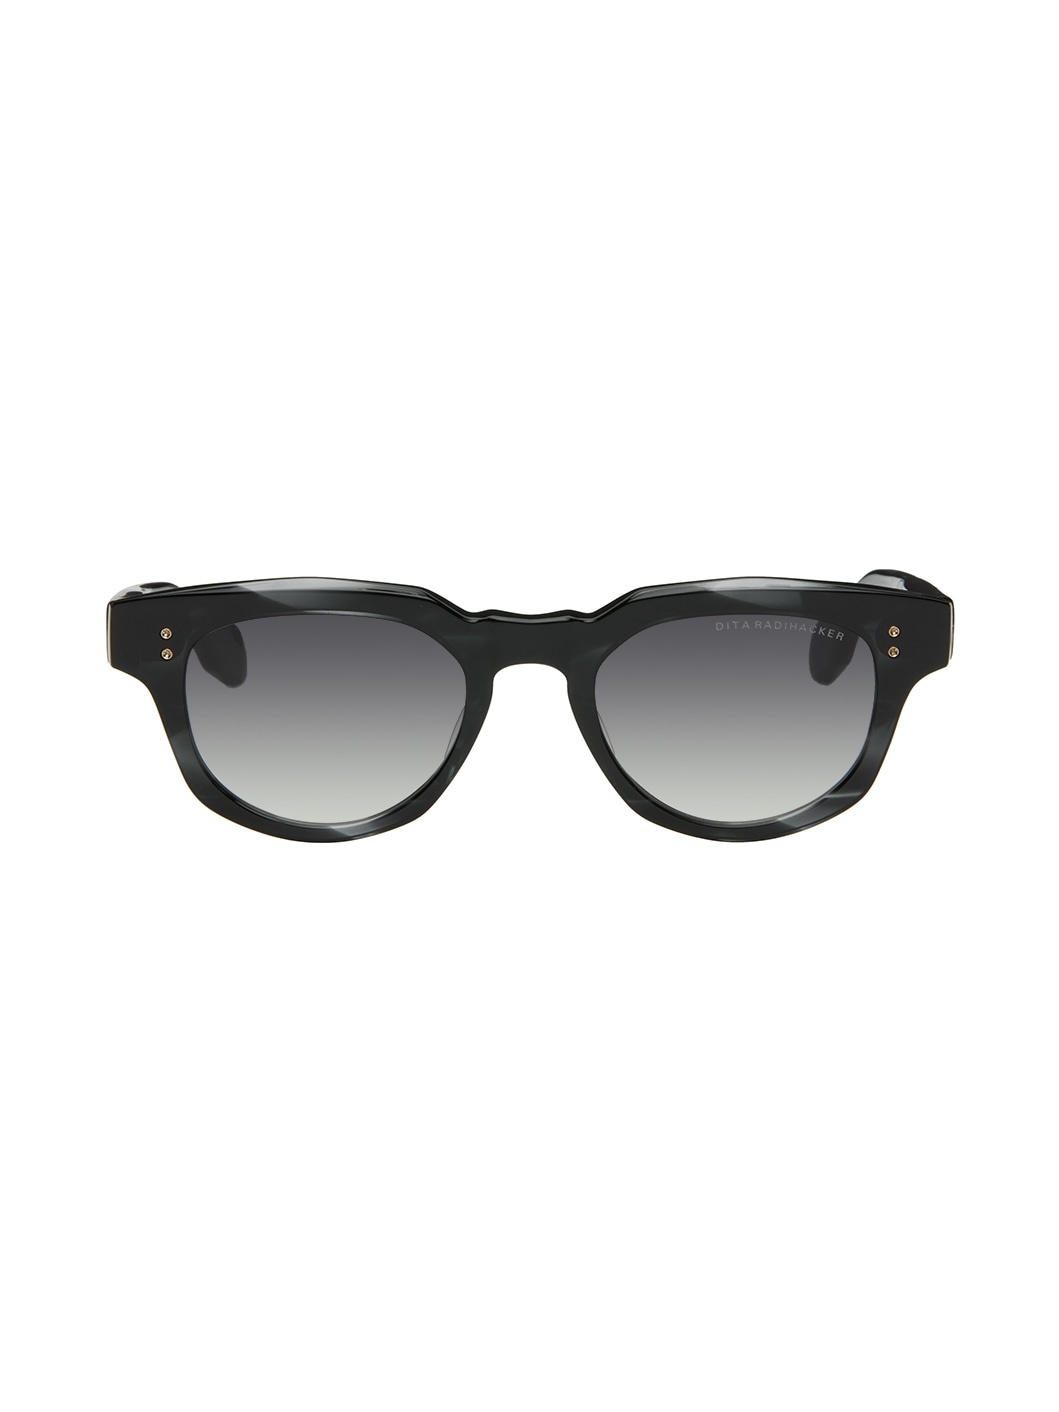 Black Radihacker Sunglasses - 1